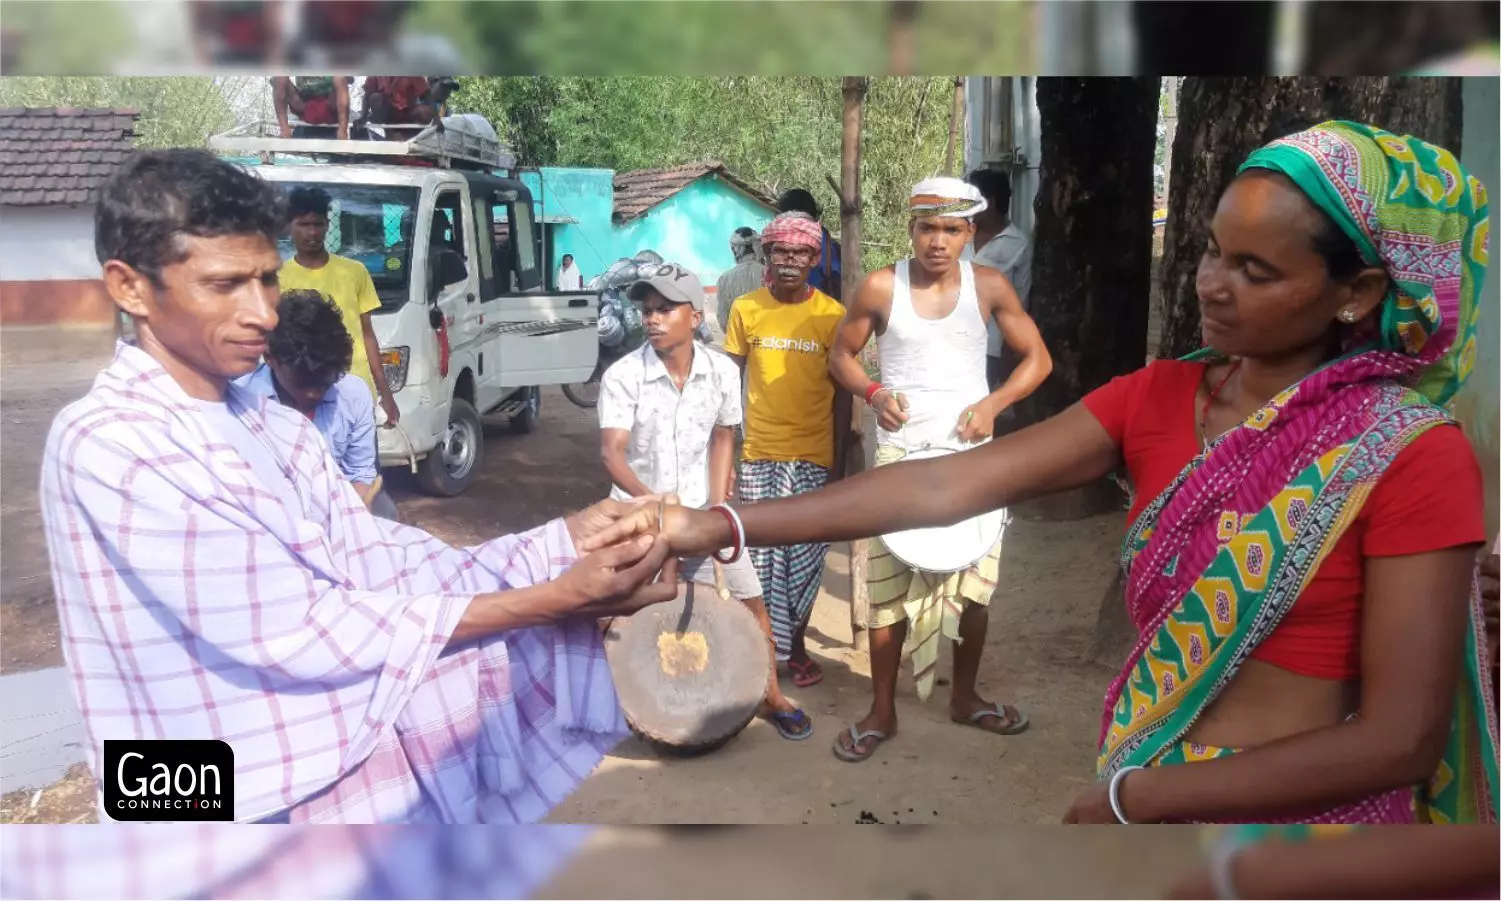 The annual ritual of sendra and temporary widowhood among tribal women of Jharkhand